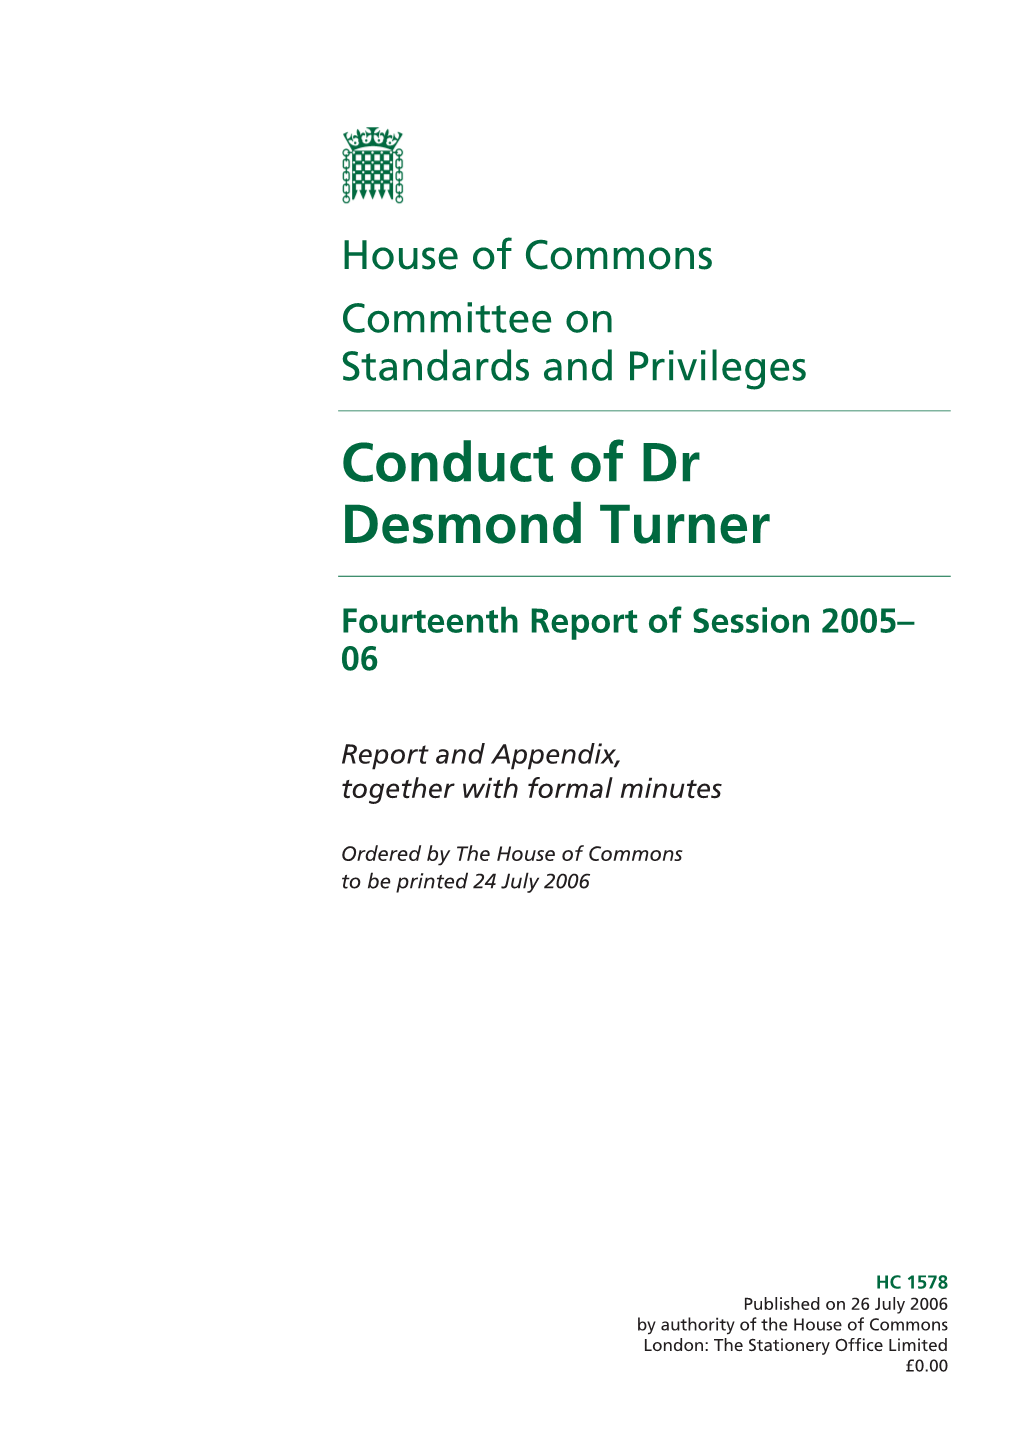 Conduct of Dr Desmond Turner